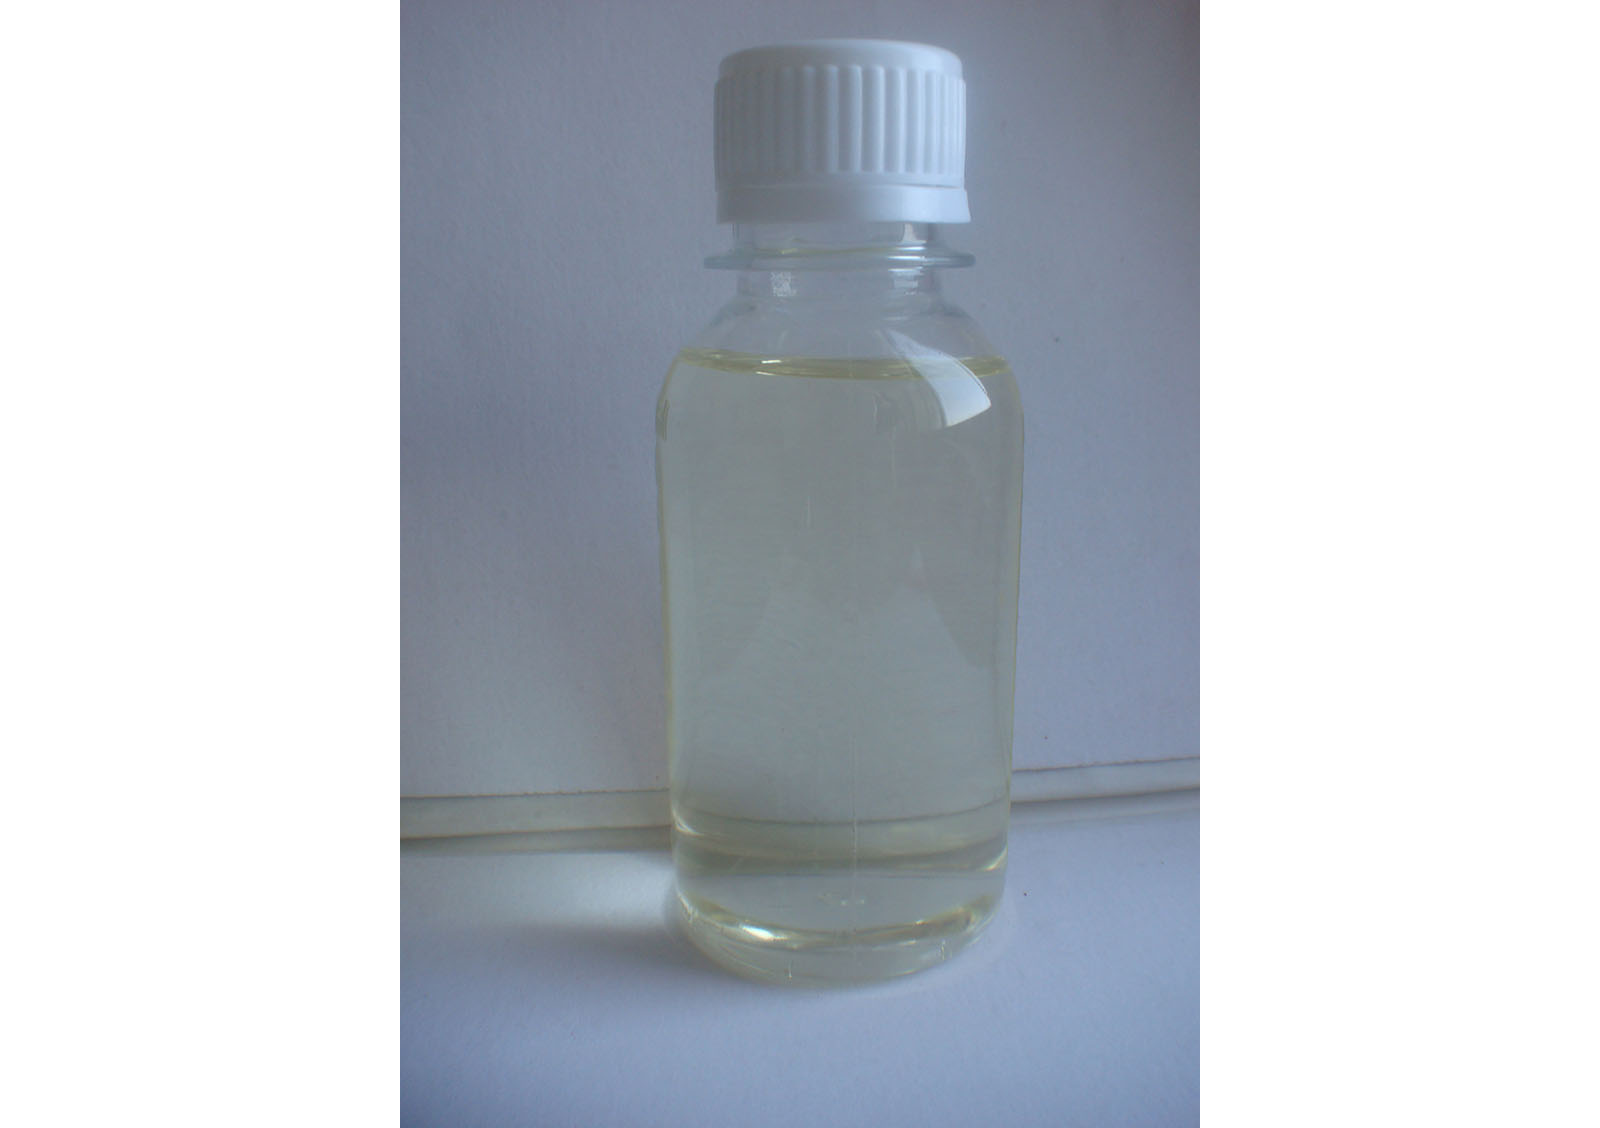 Jxl-401 compound bactericide and algaecide